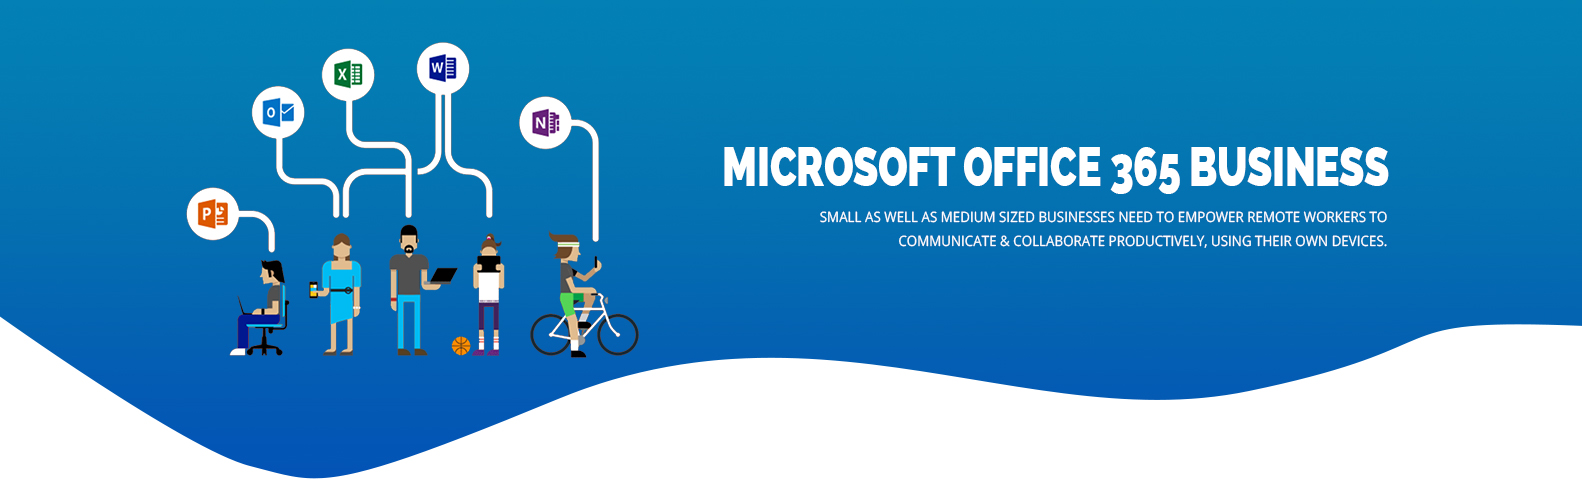 Microsoft-office-365-business